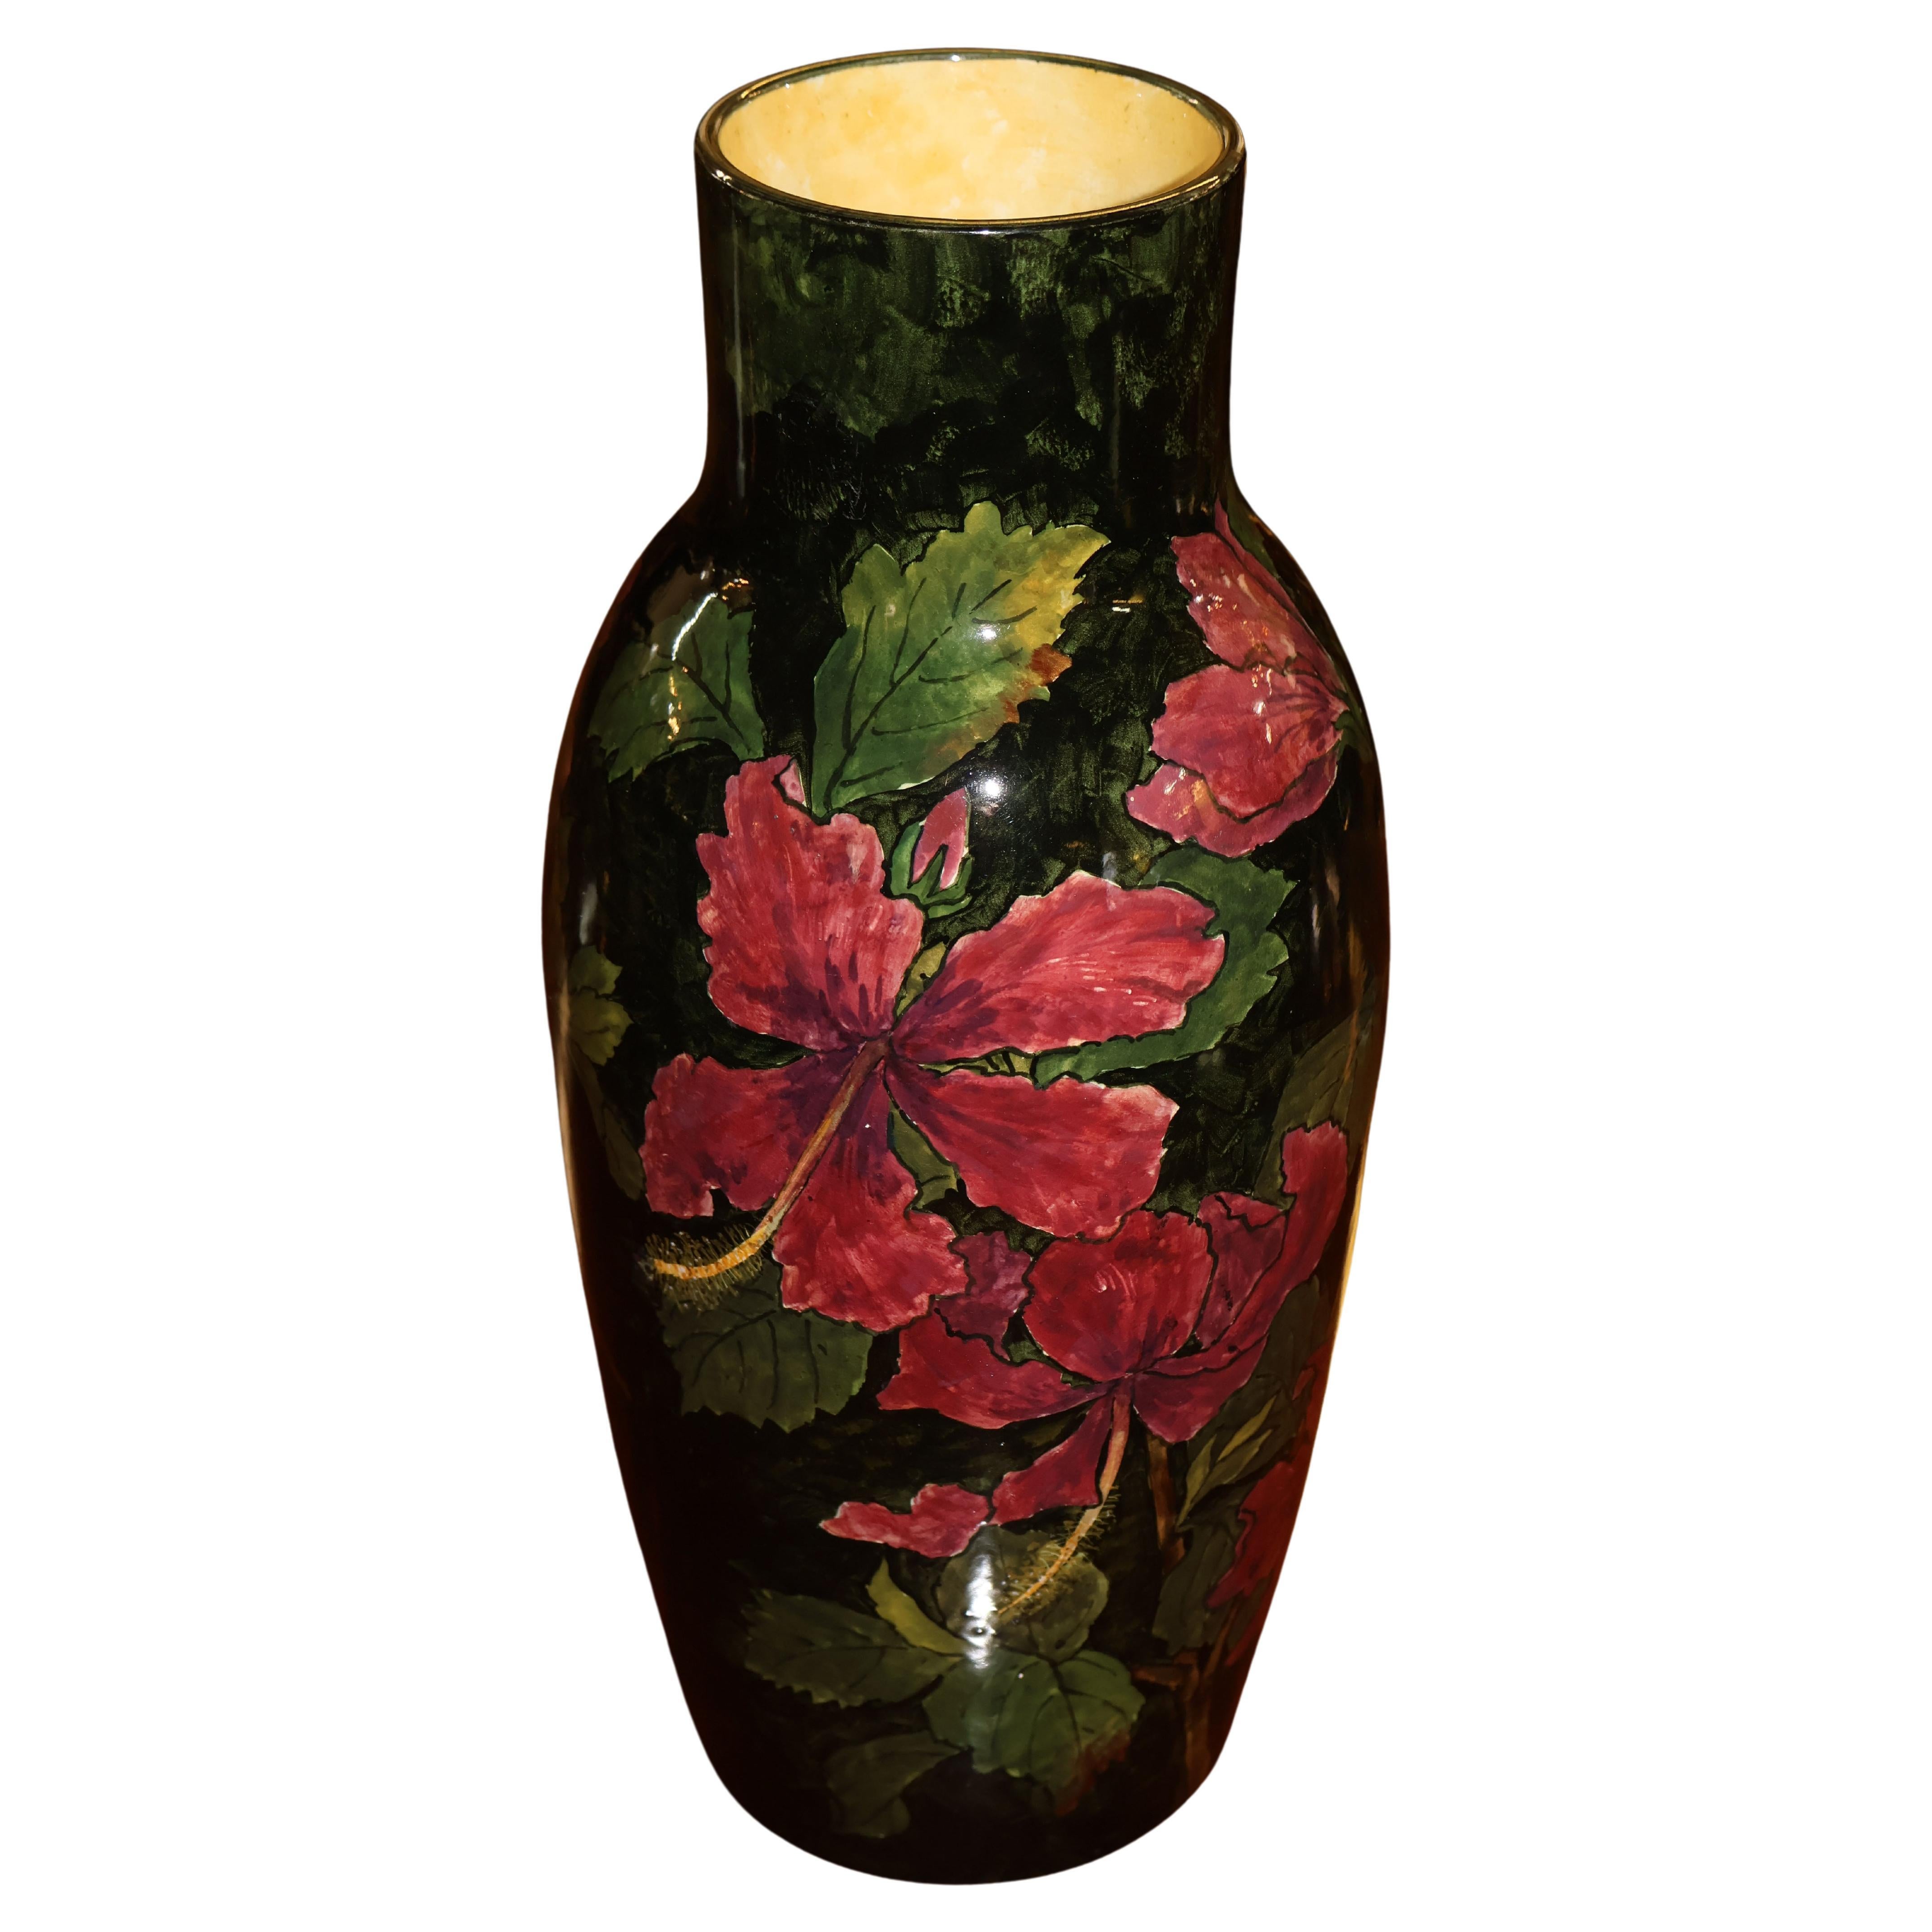 Große John Bennett-Vase aus bemaltem und glasiertem Steingut mit Hibiskusmotiv, um 1880